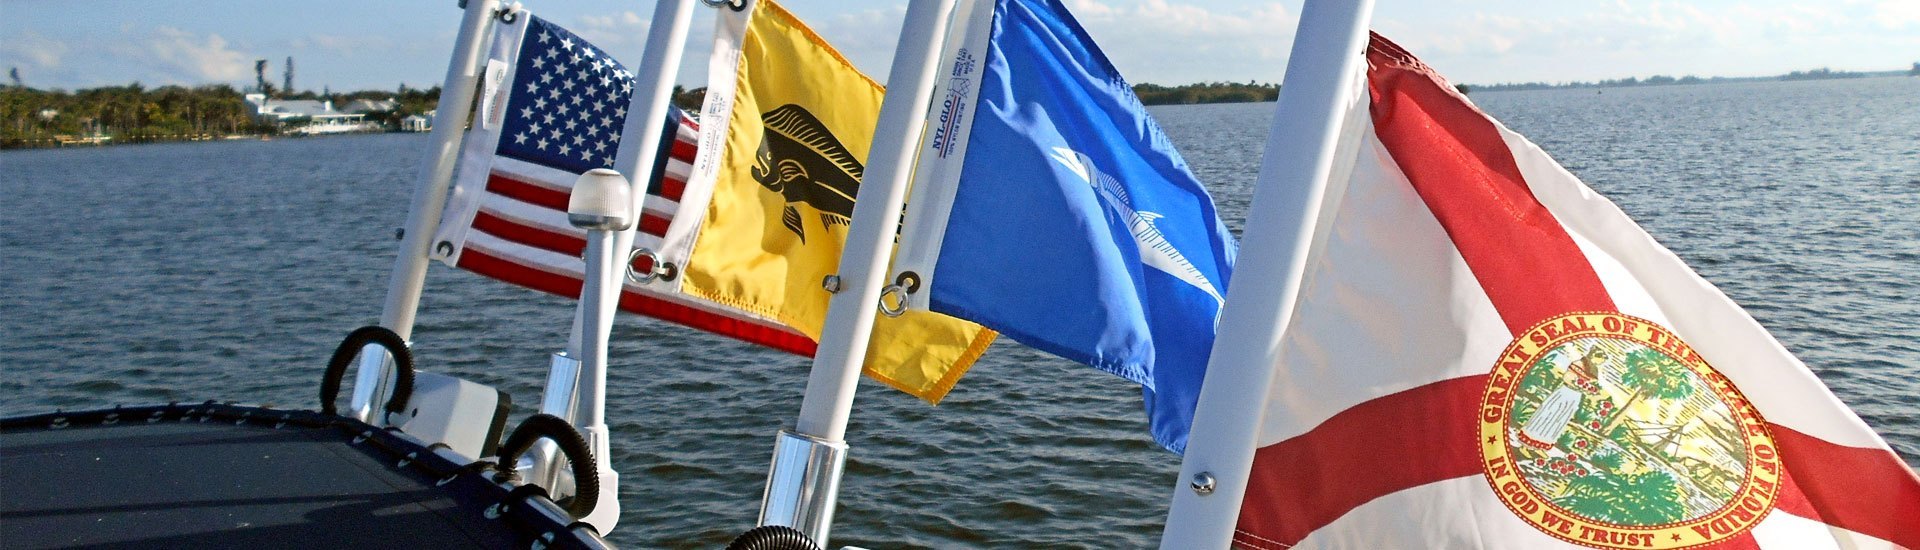 Nautical Flags | Sets, Clips, Staffs, Poles, Sockets, Floats 